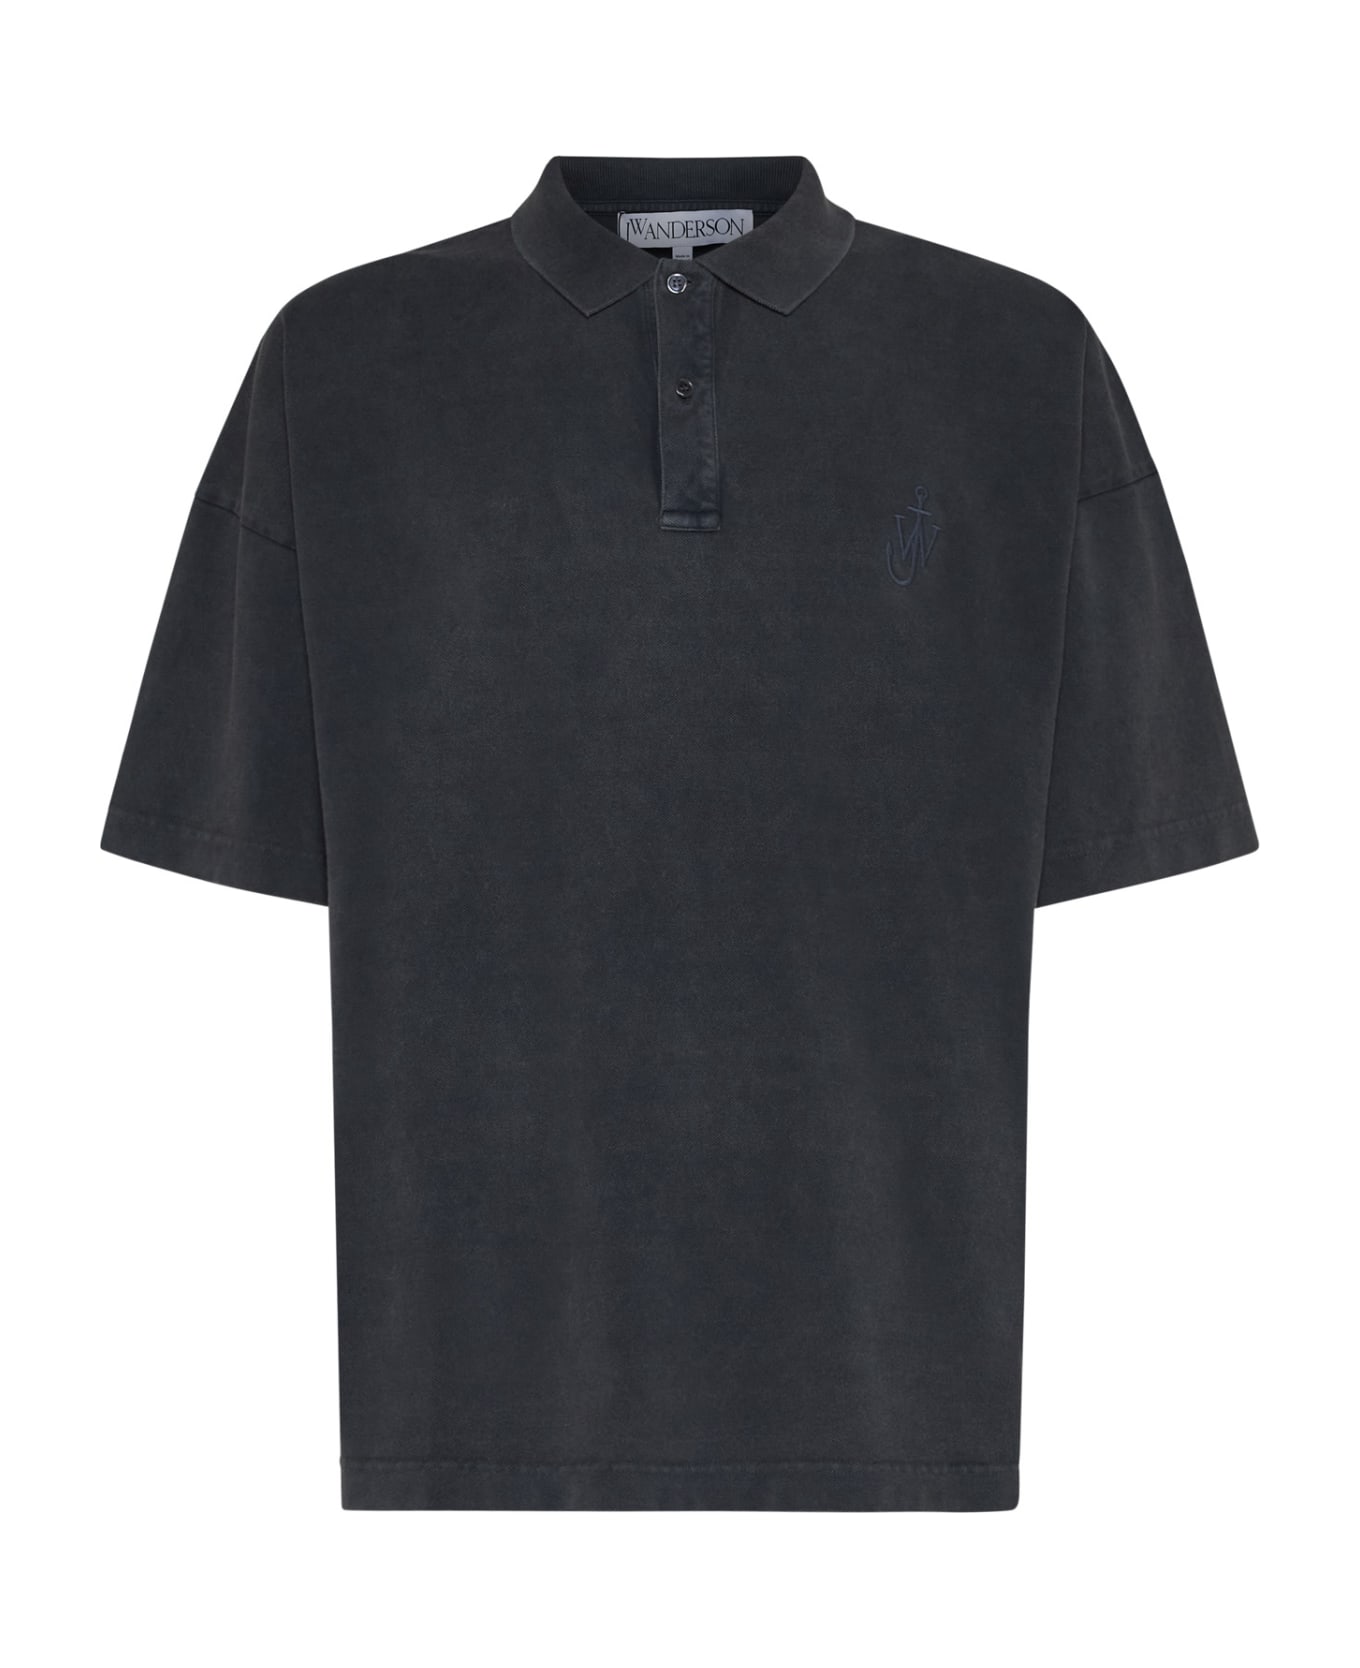 J.W. Anderson Polo Shirt - Charcoal